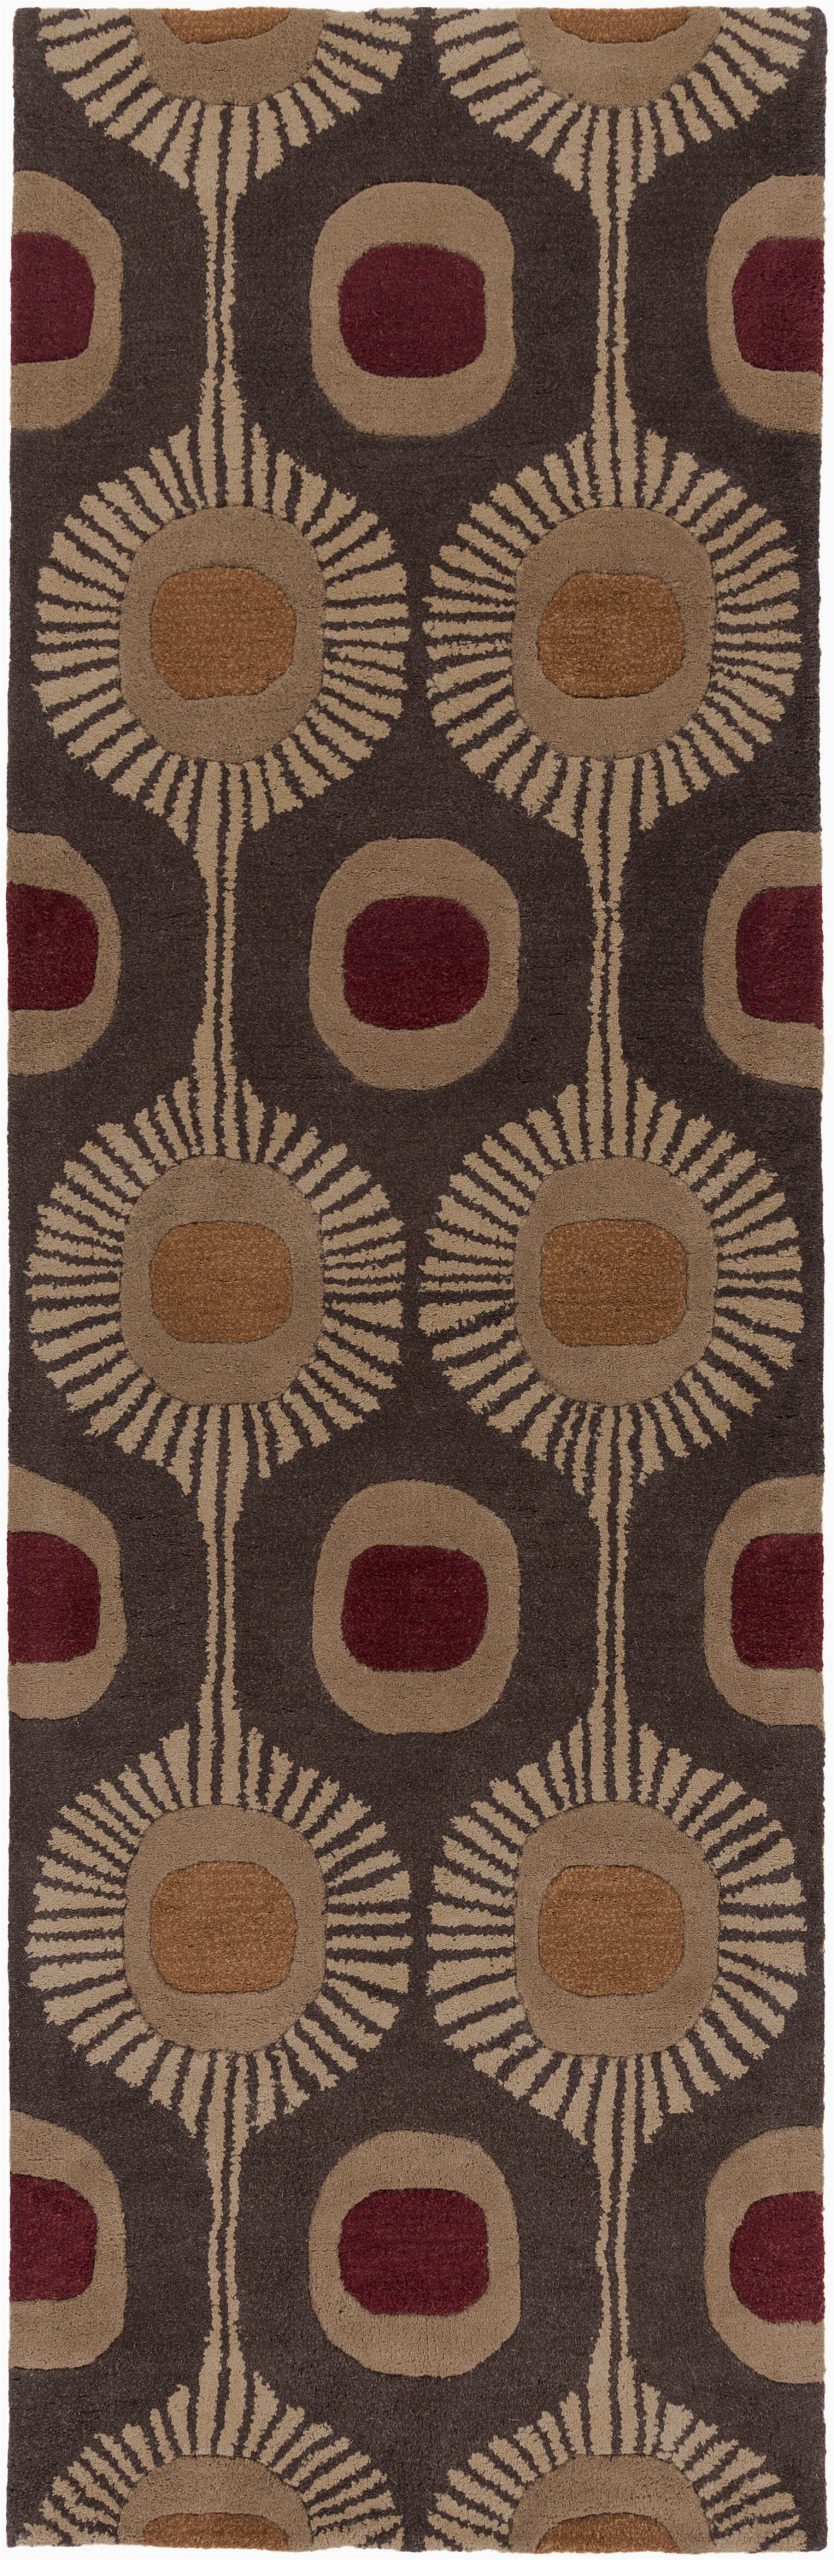 brown tan kitchen rugs c a1247 2361